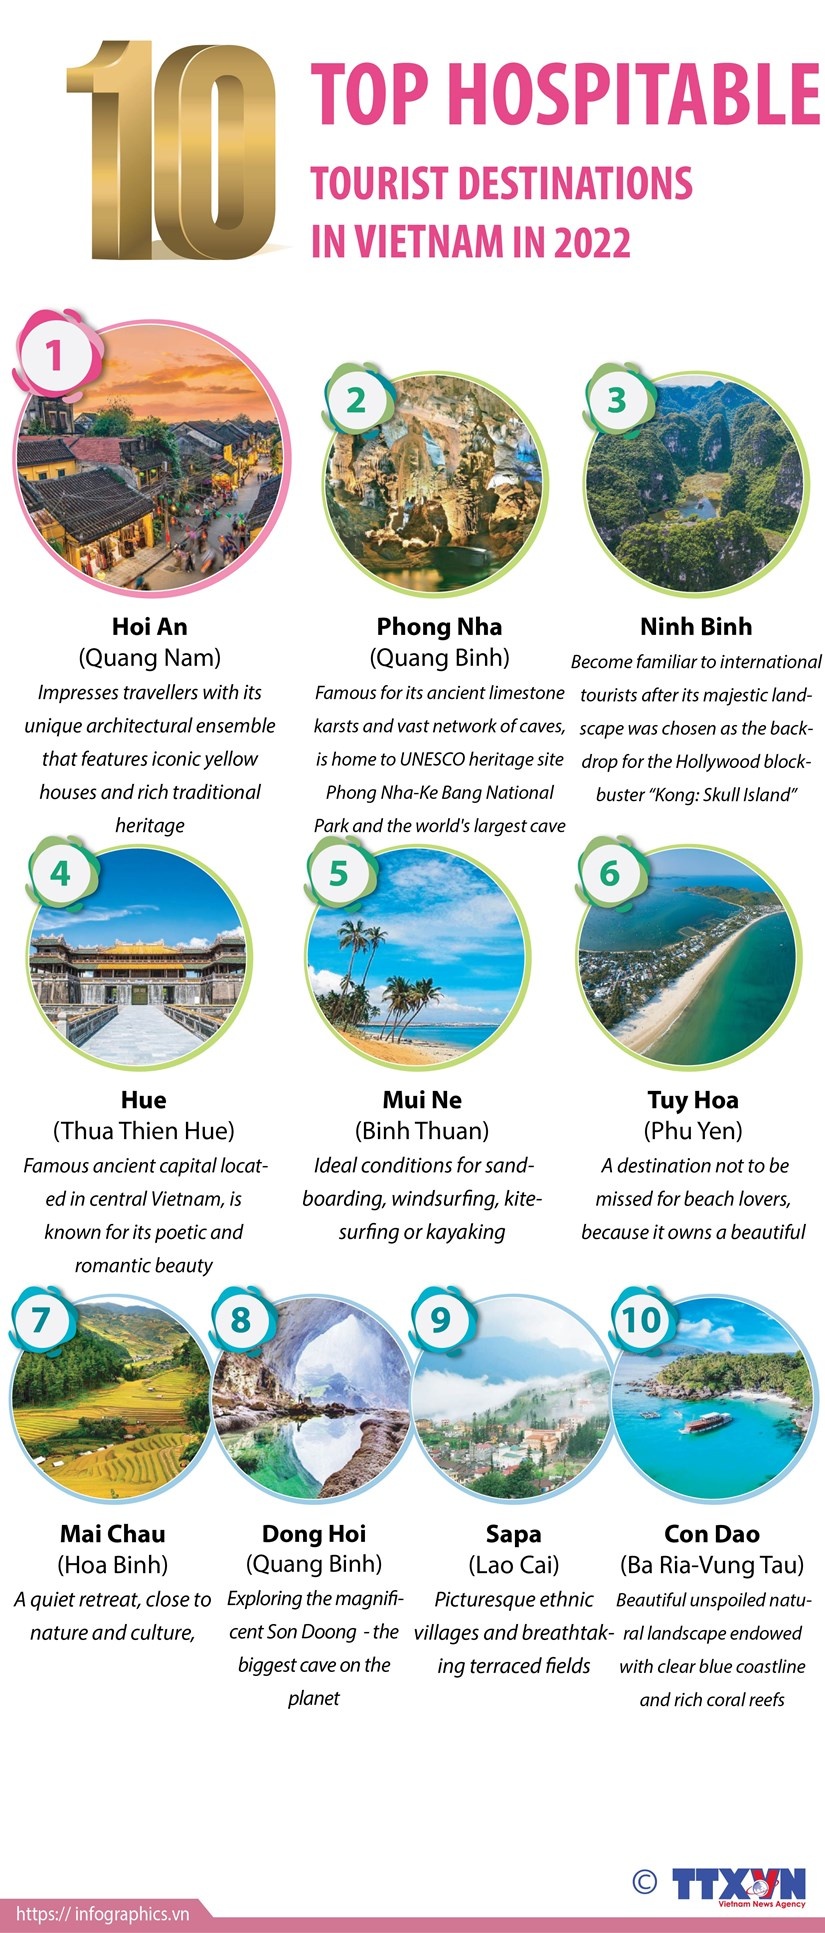 Top 10 hospitable tourist destinations in Vietnam in 2022